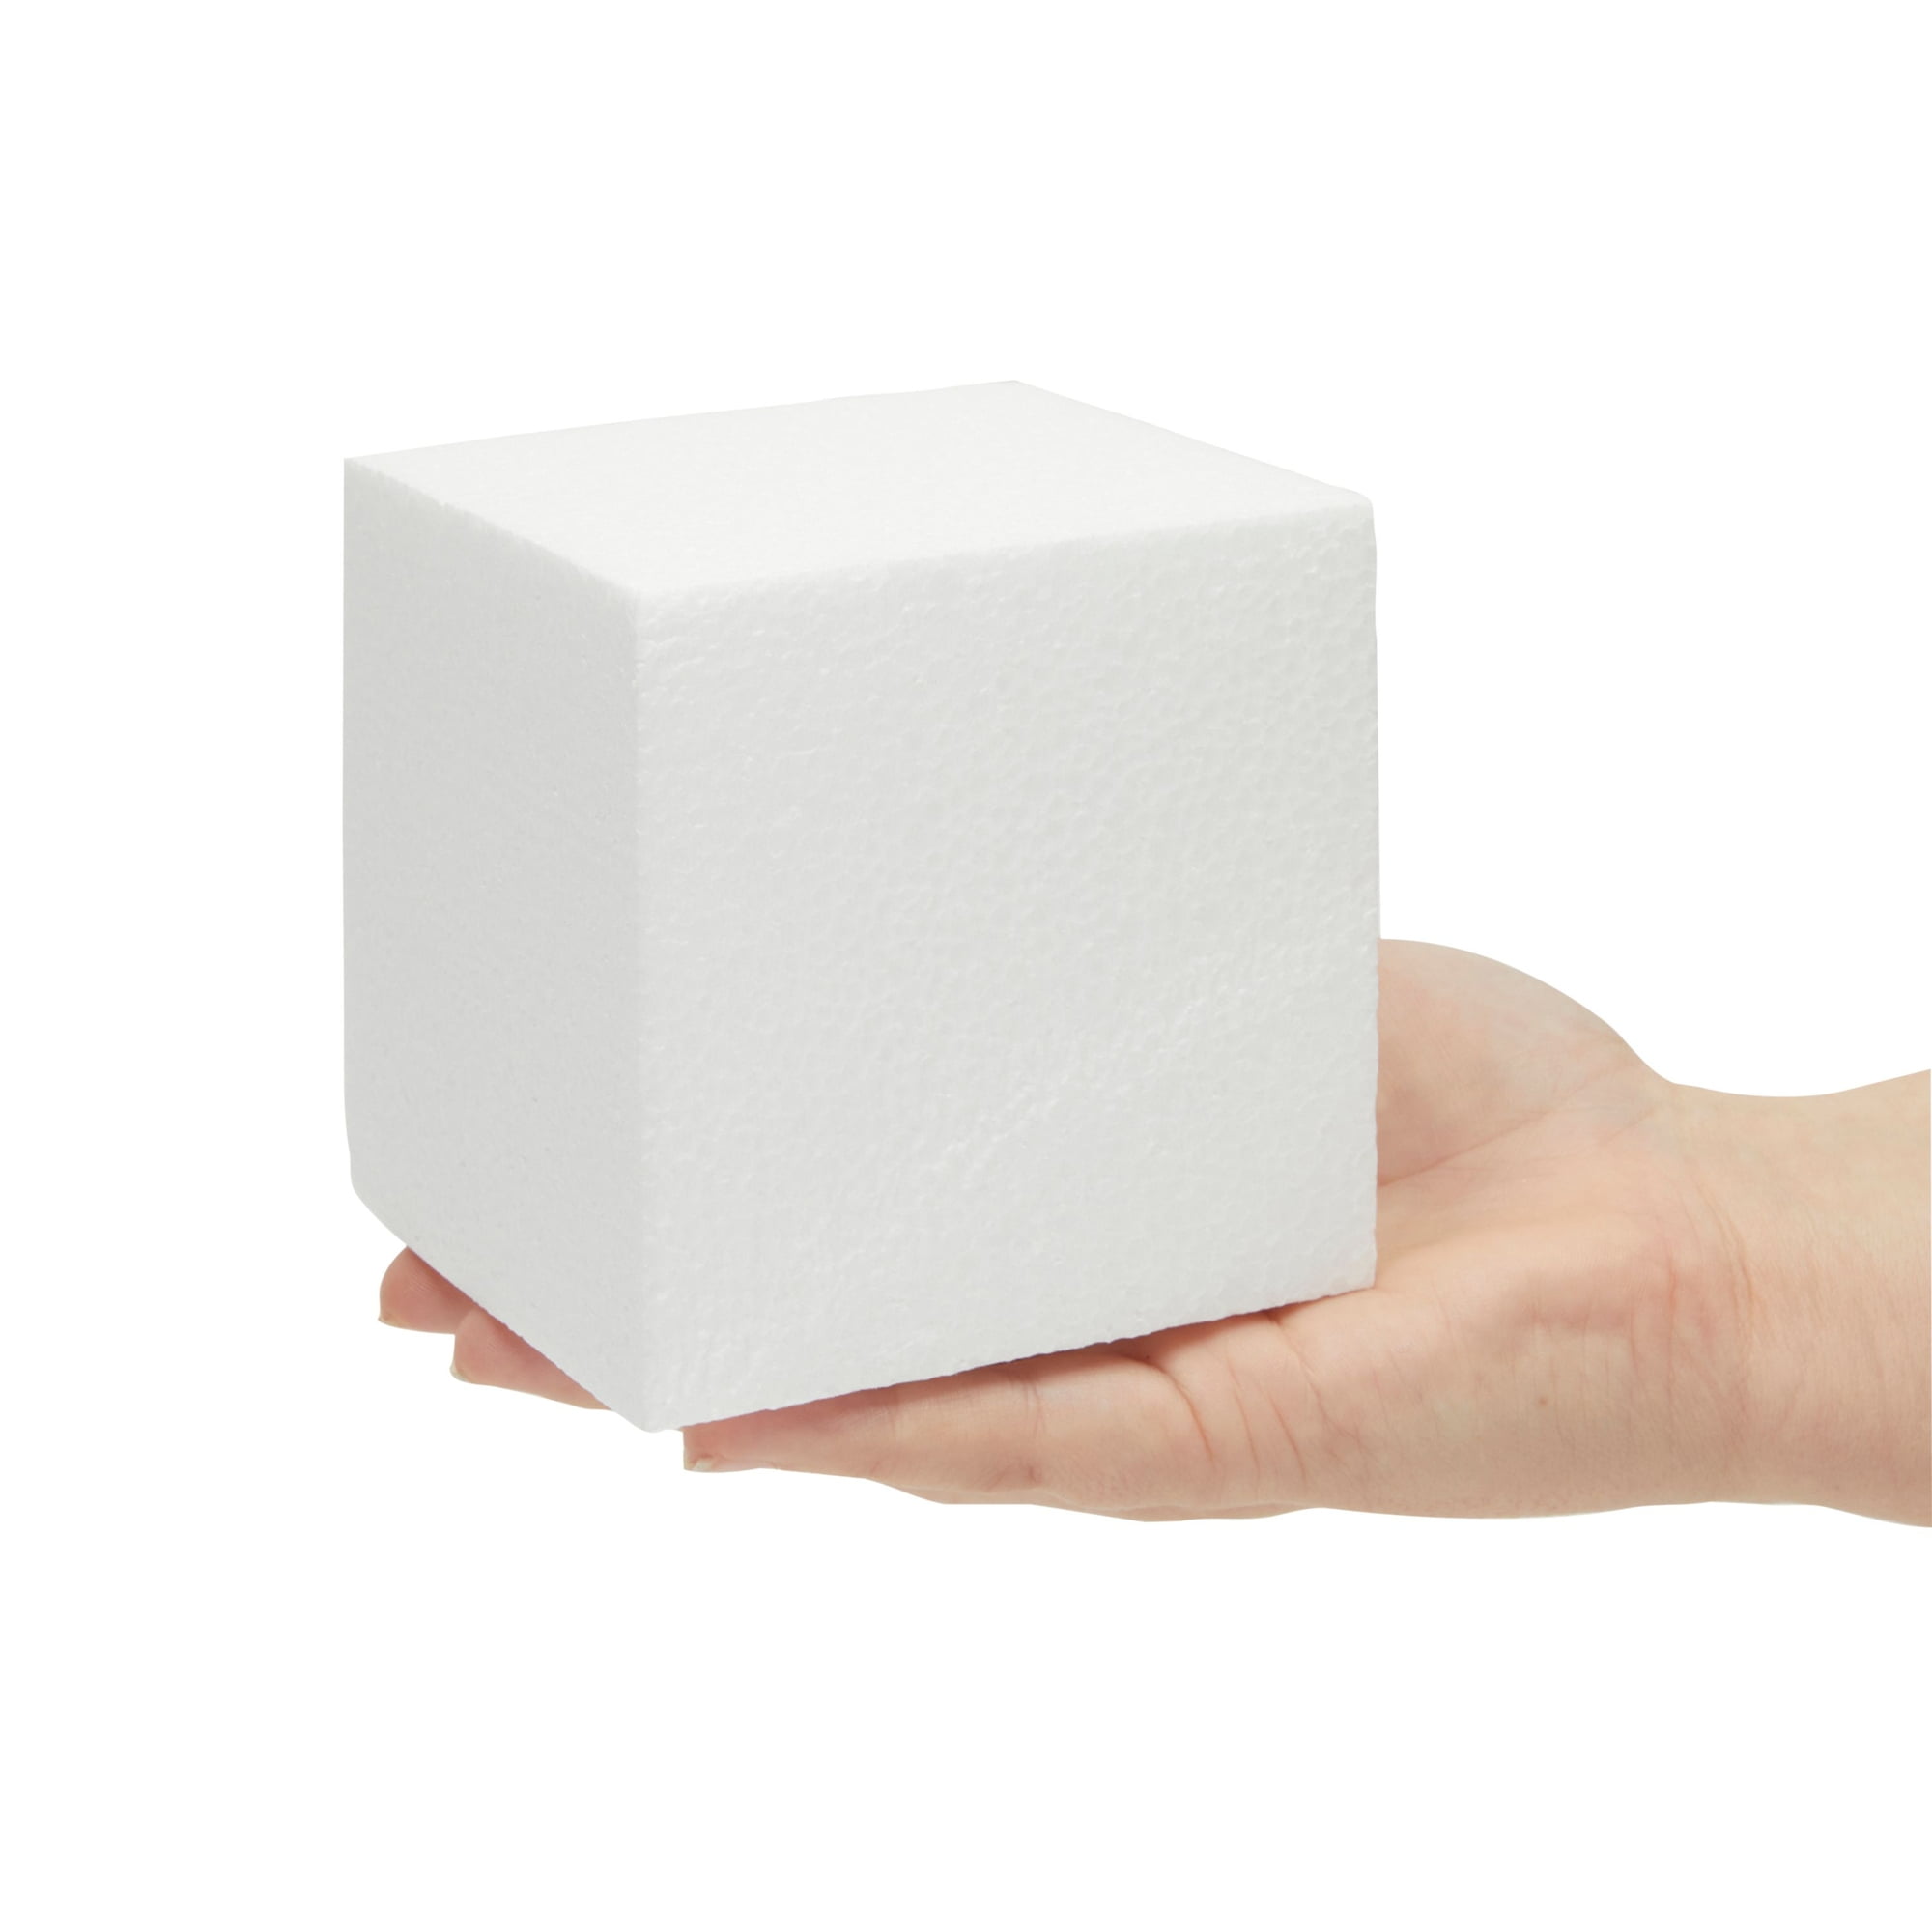 White Foam Blocks for Crafts (4 x 4 x 1 in, 40 Pack